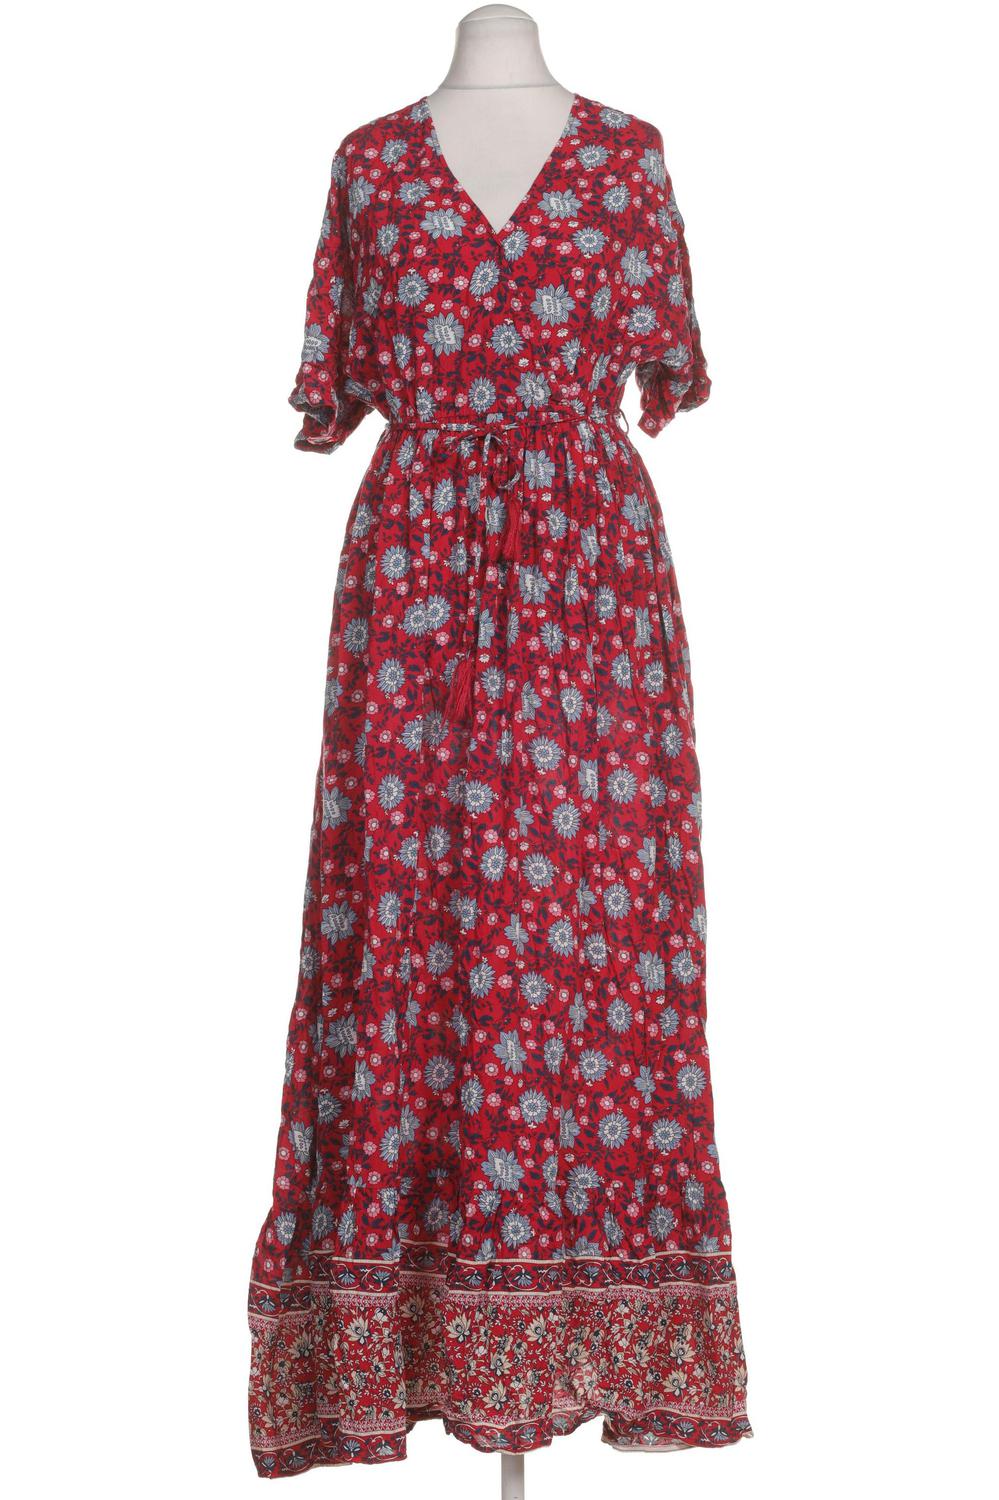 MANGO Kleid Damen Dress Damenkleid Gr. M Viskose rot #6dbc9f8 | eBay